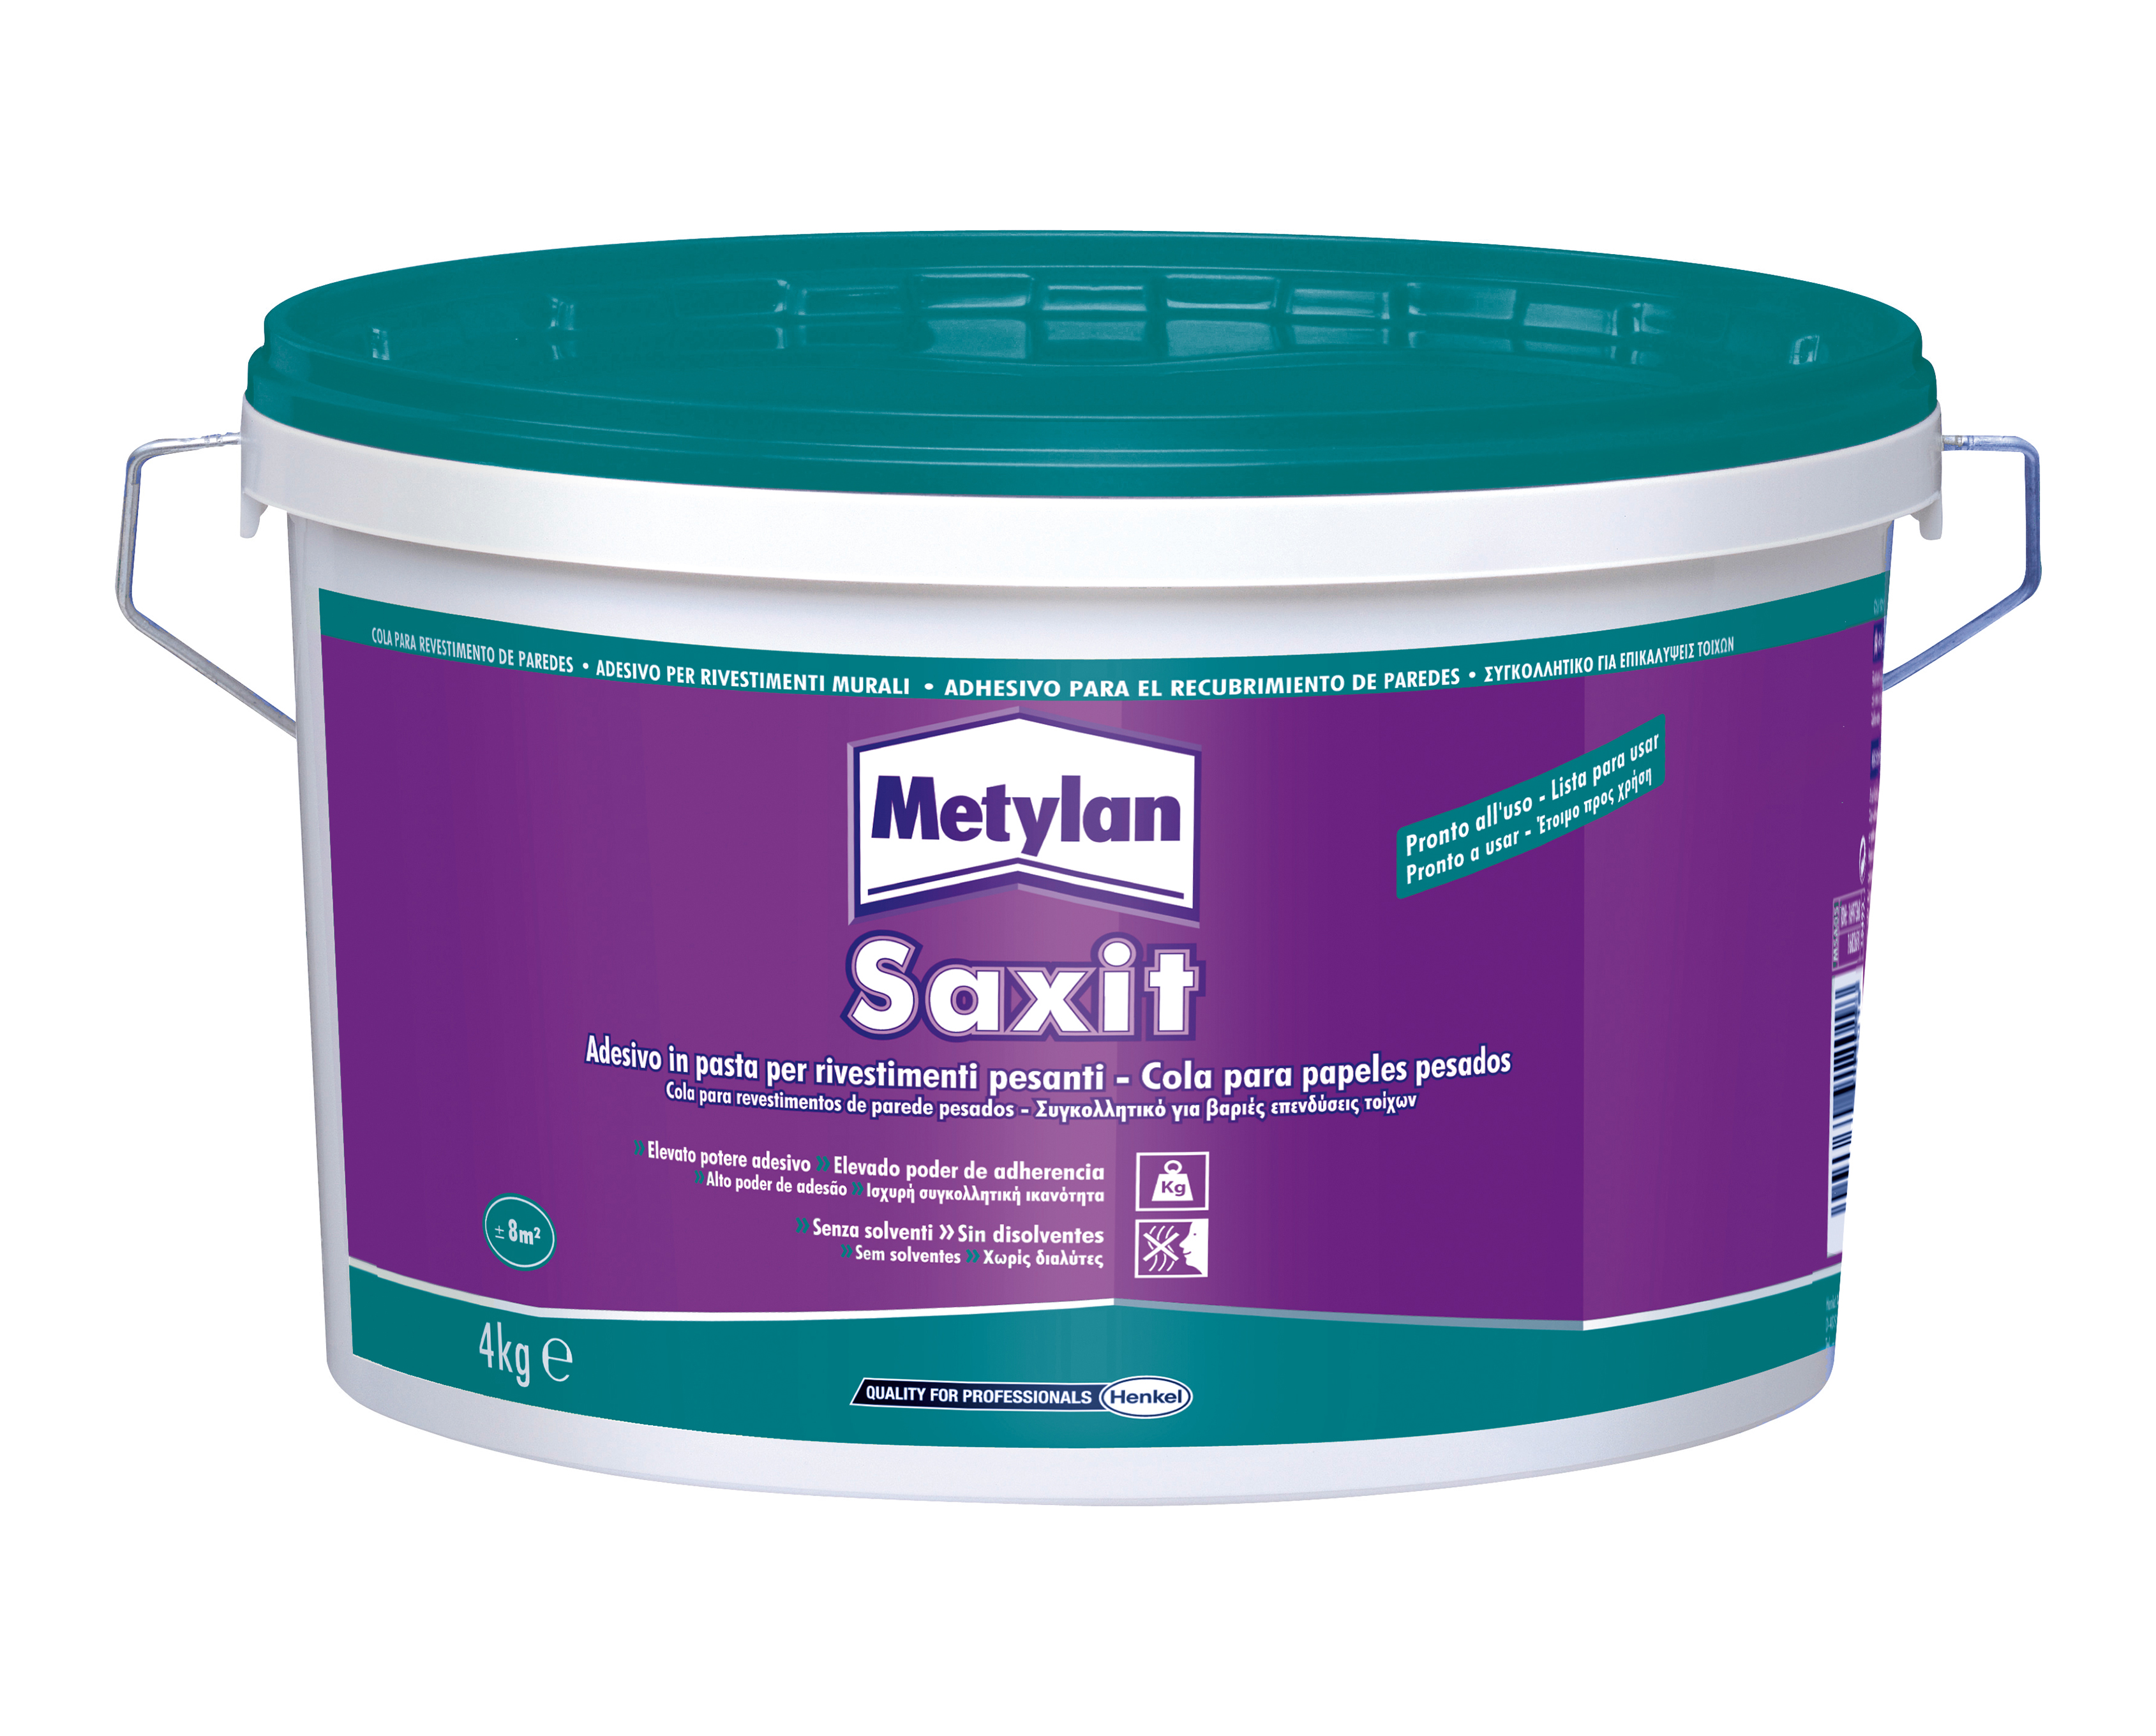 Metylan saxit 4kg (ex 1135805)